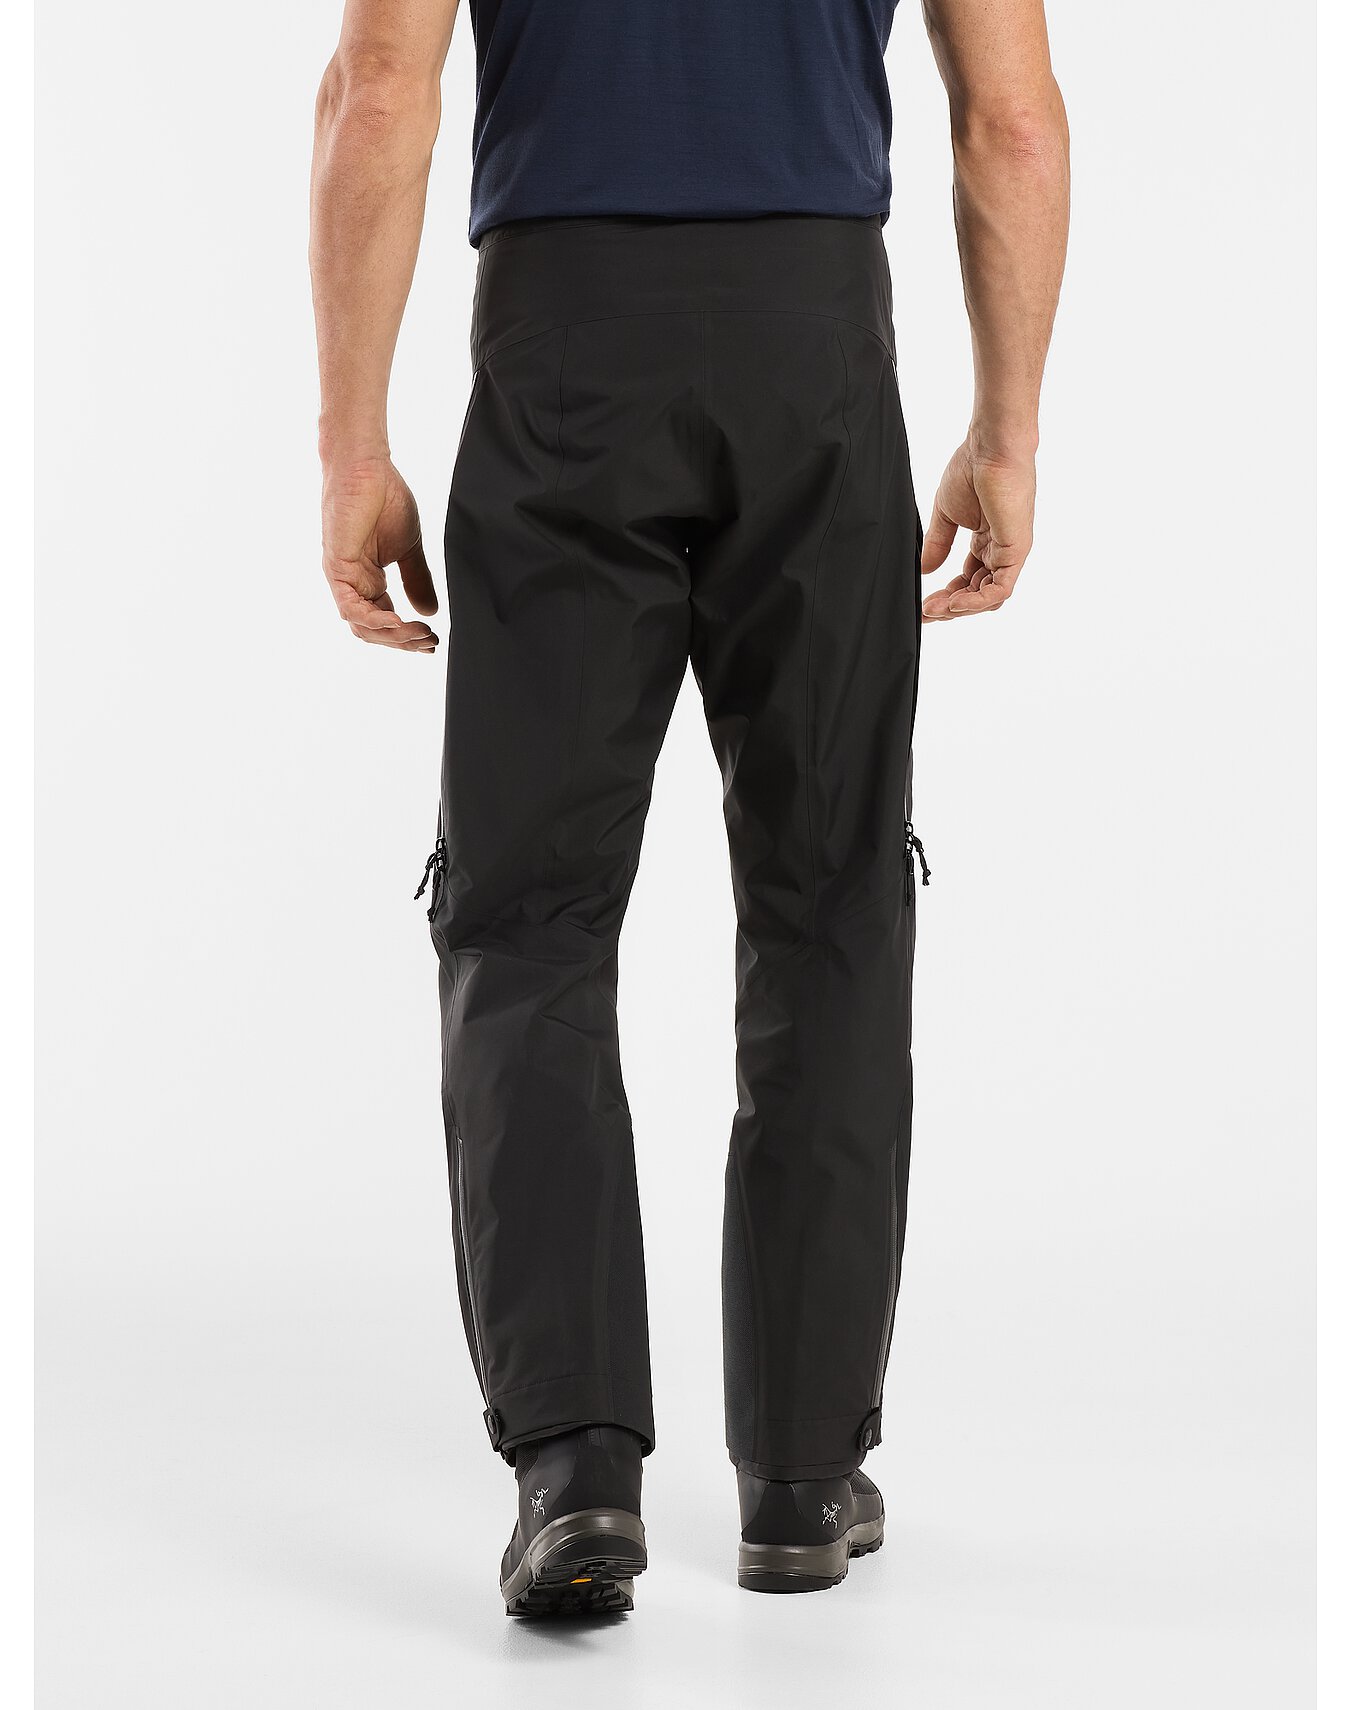 ARC'TERYX GAMMA LT Pant Mens Tungsten Gray Softshell Lightweight Outerwear  Large $127.00 - PicClick